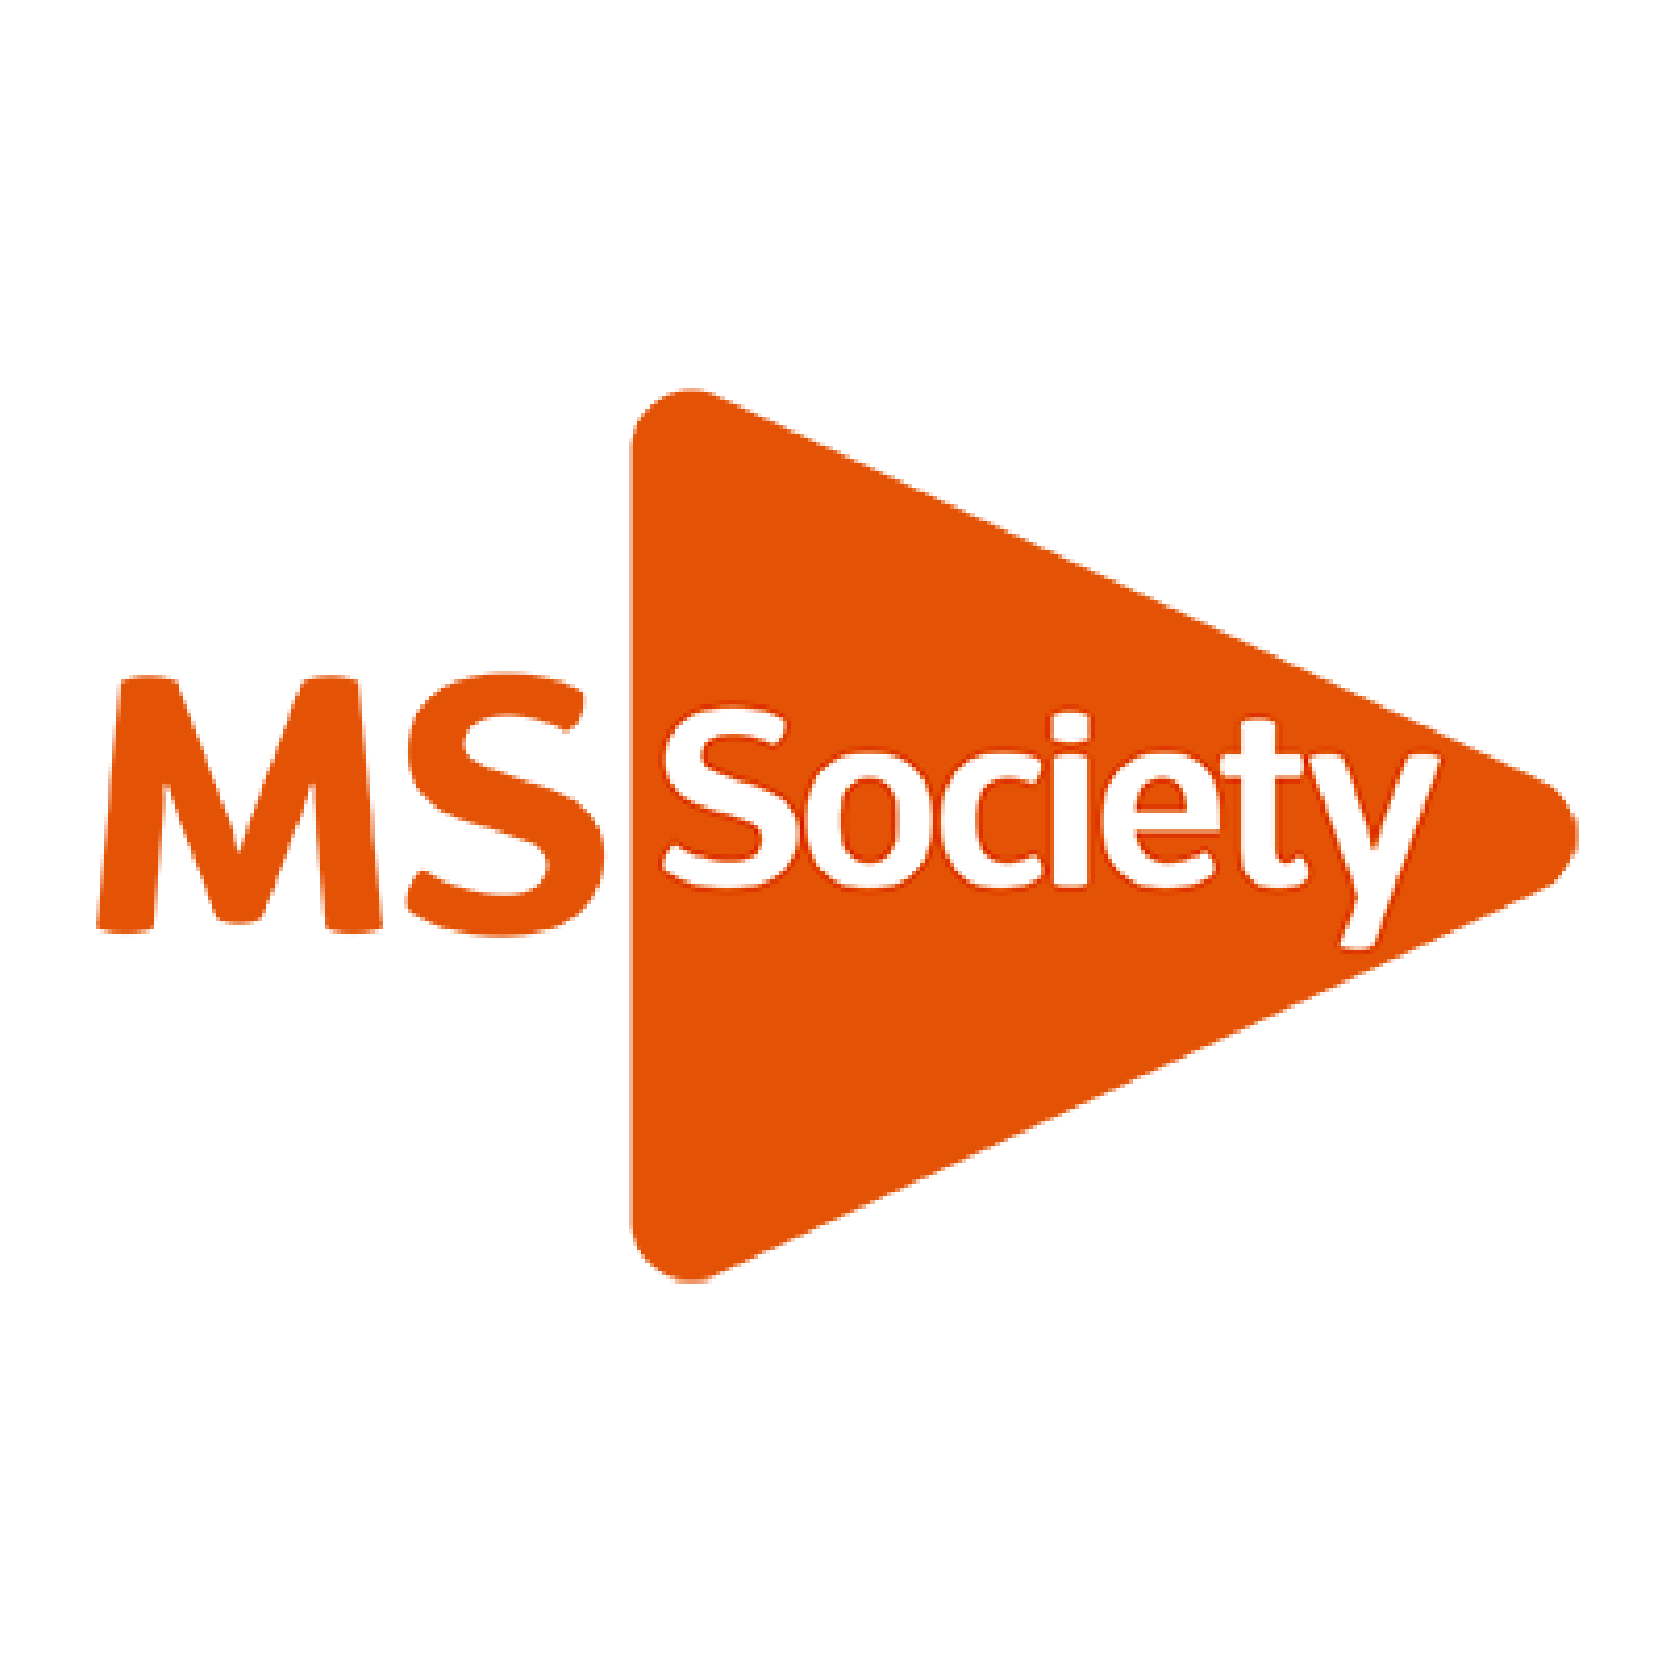 MS Society square logo